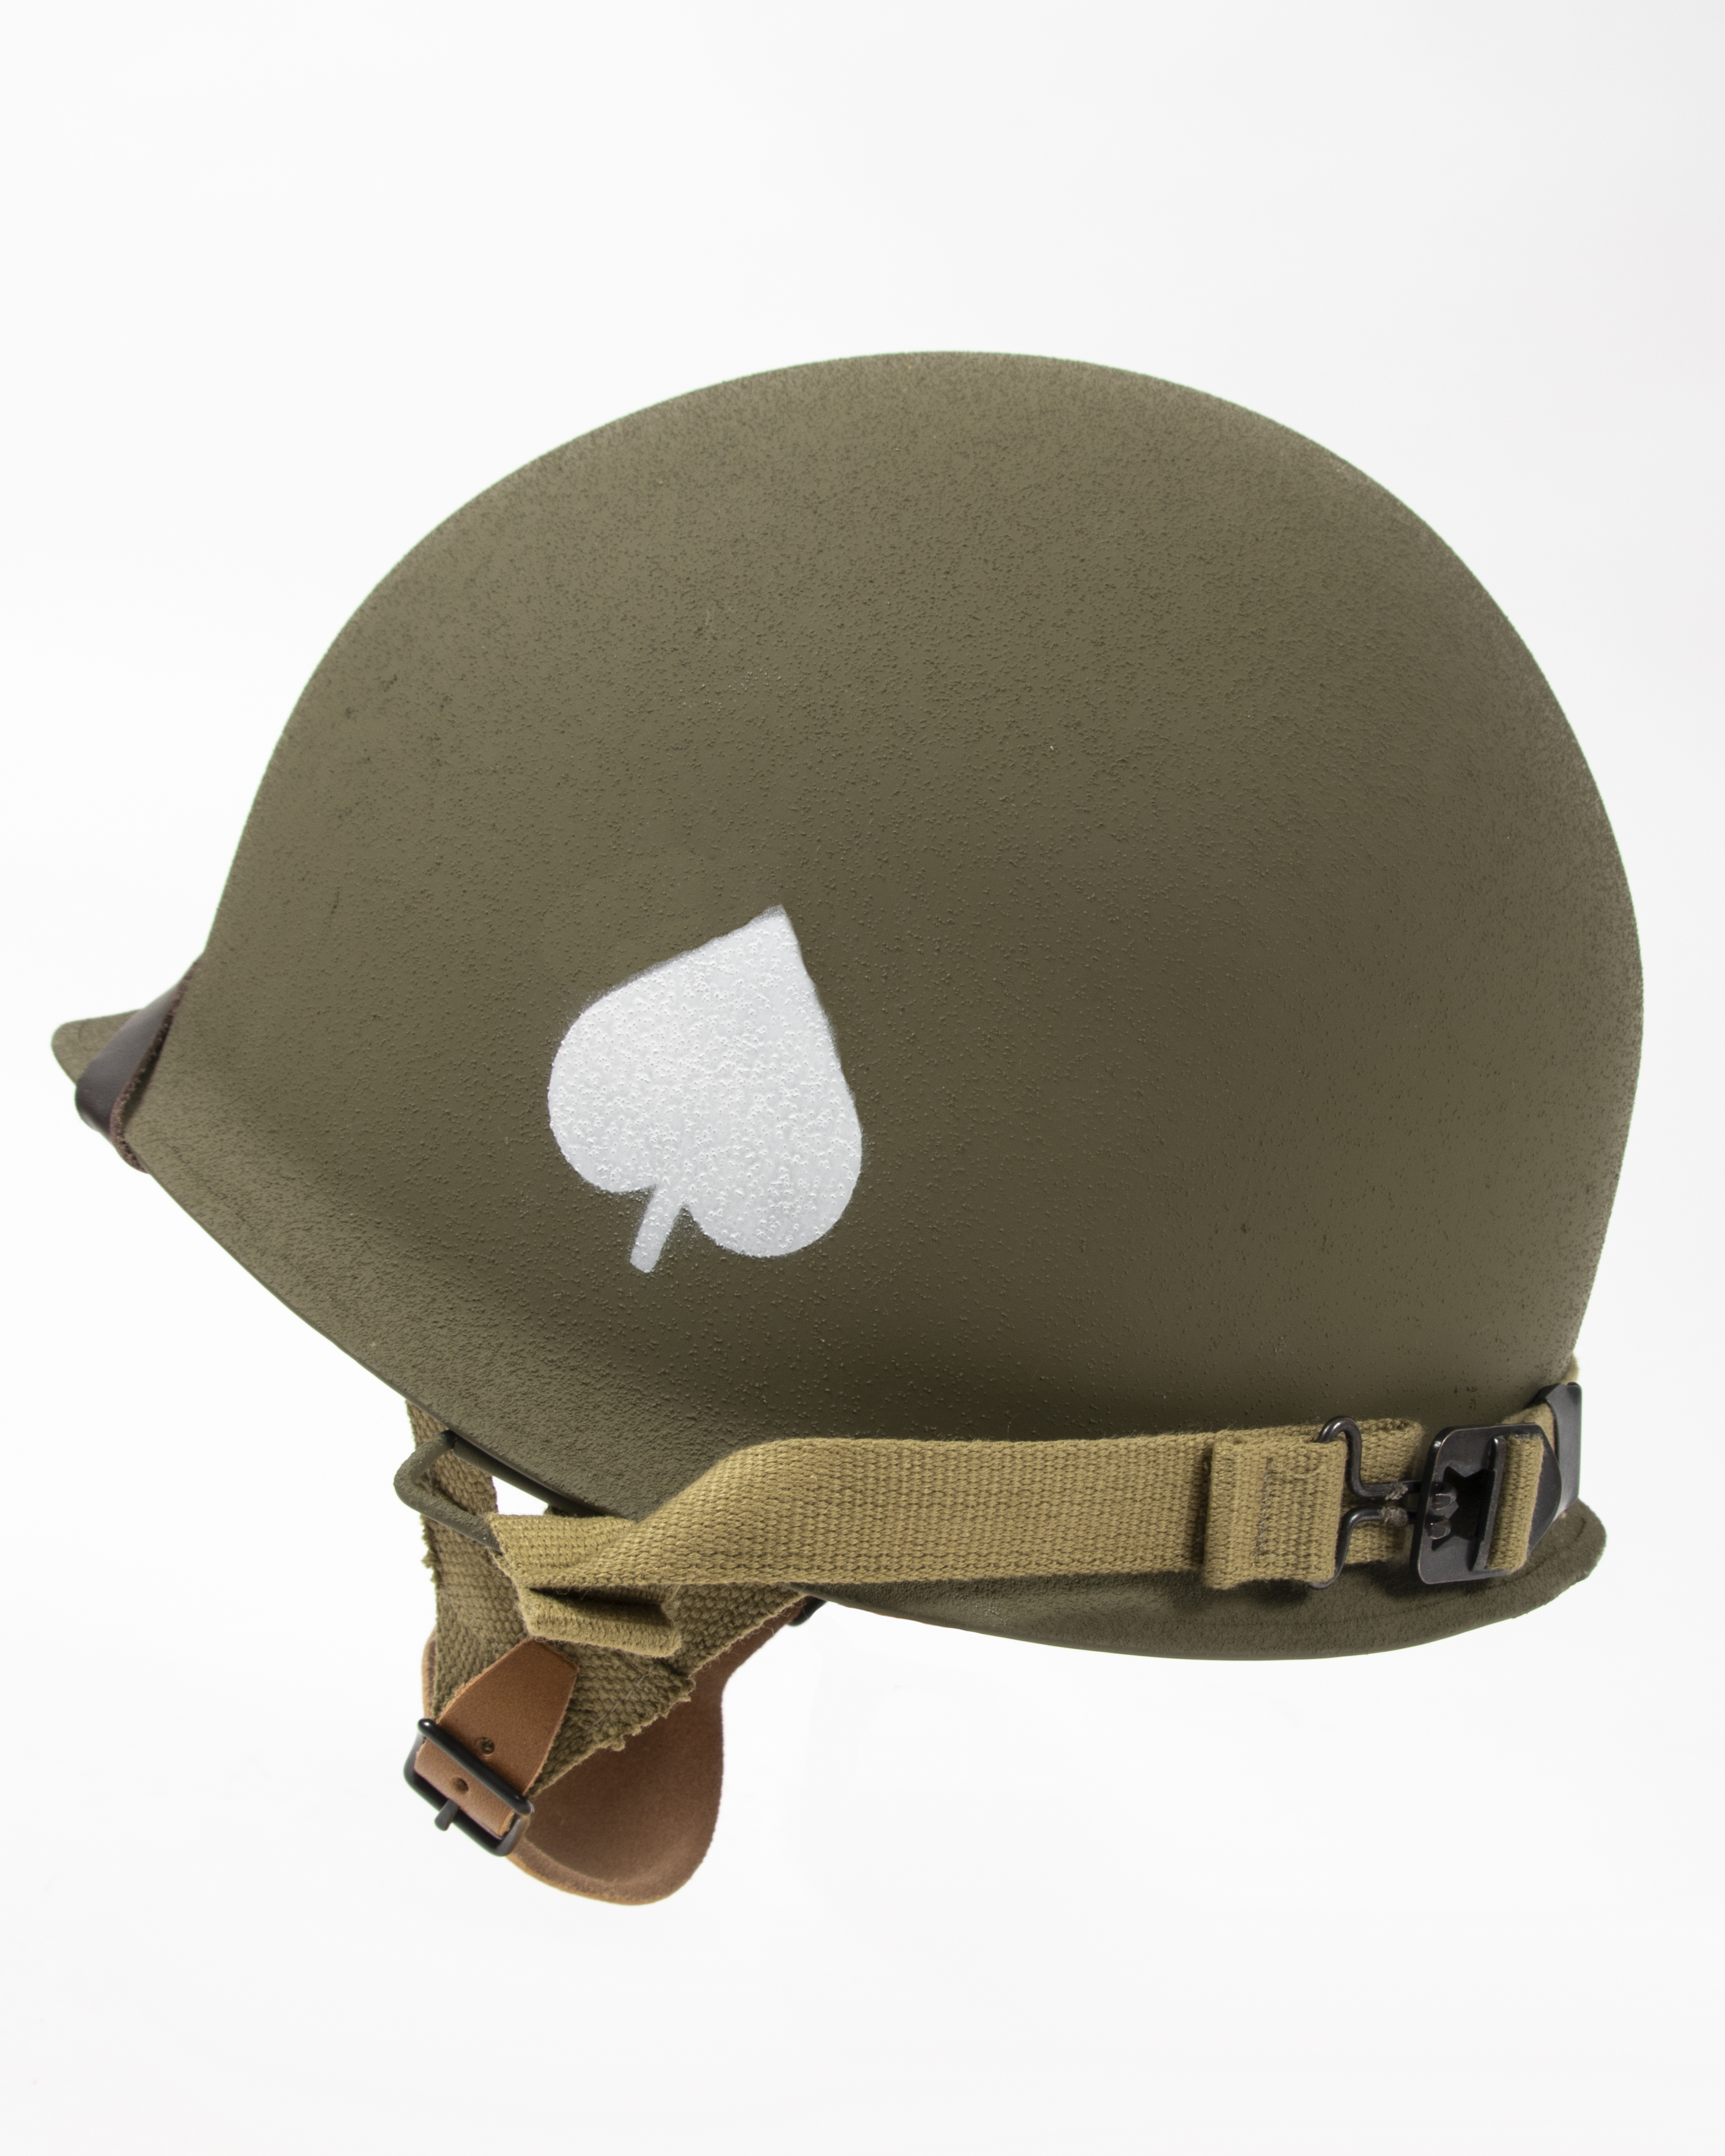 Reproduction Helmet For Nomura Sky Patrol 